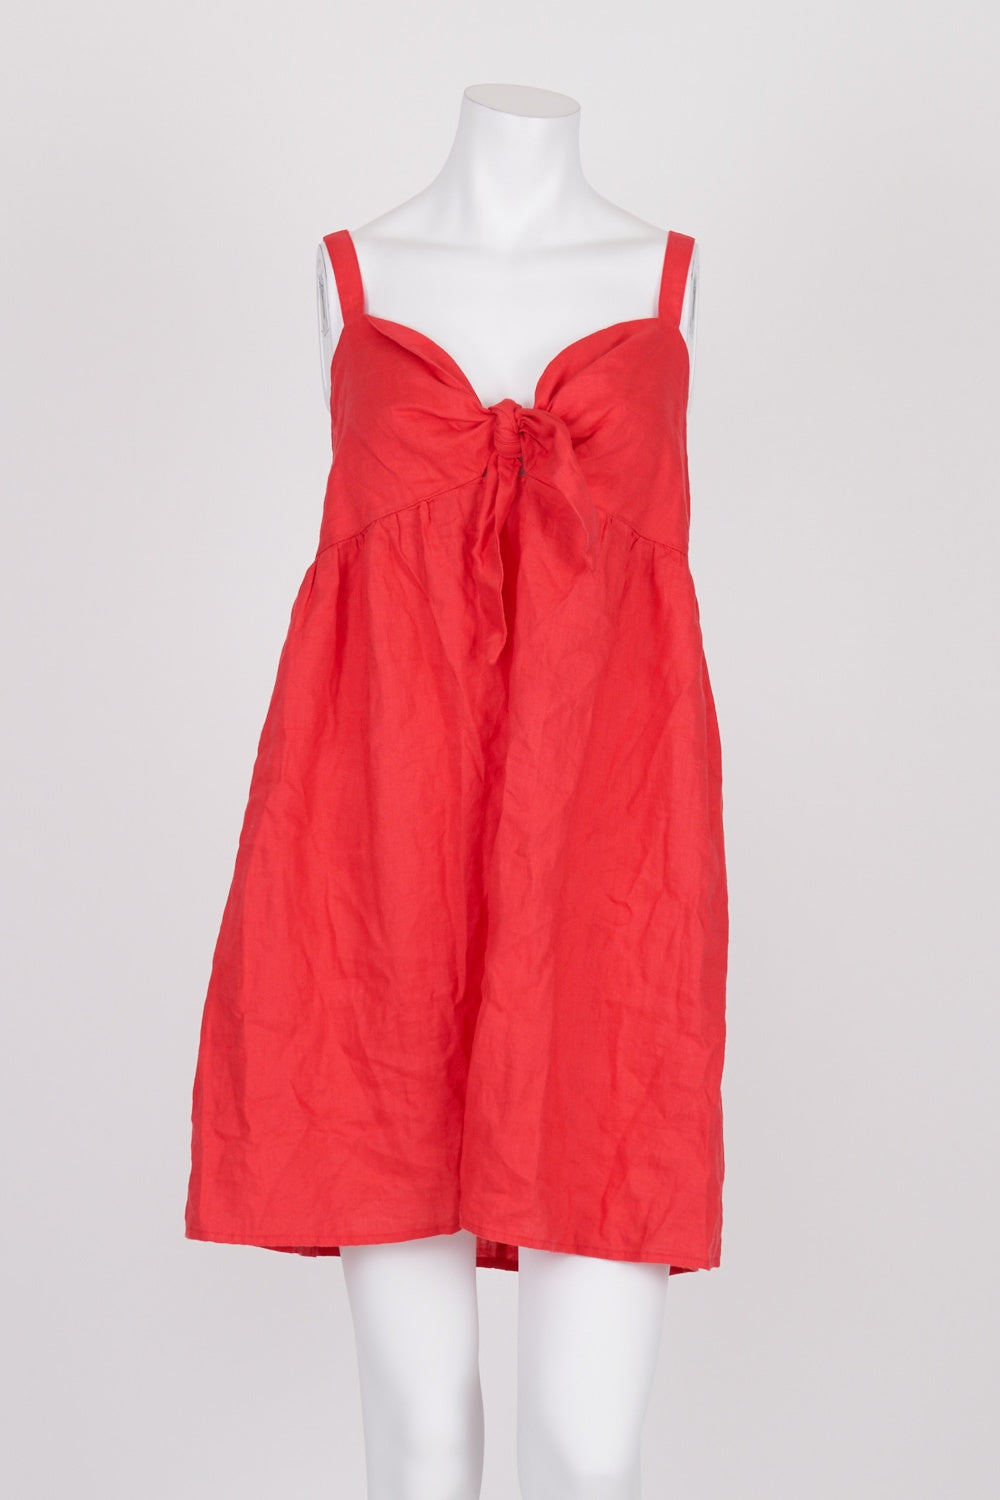 Rhythm 100% Linen Red Tie Front Dress 12